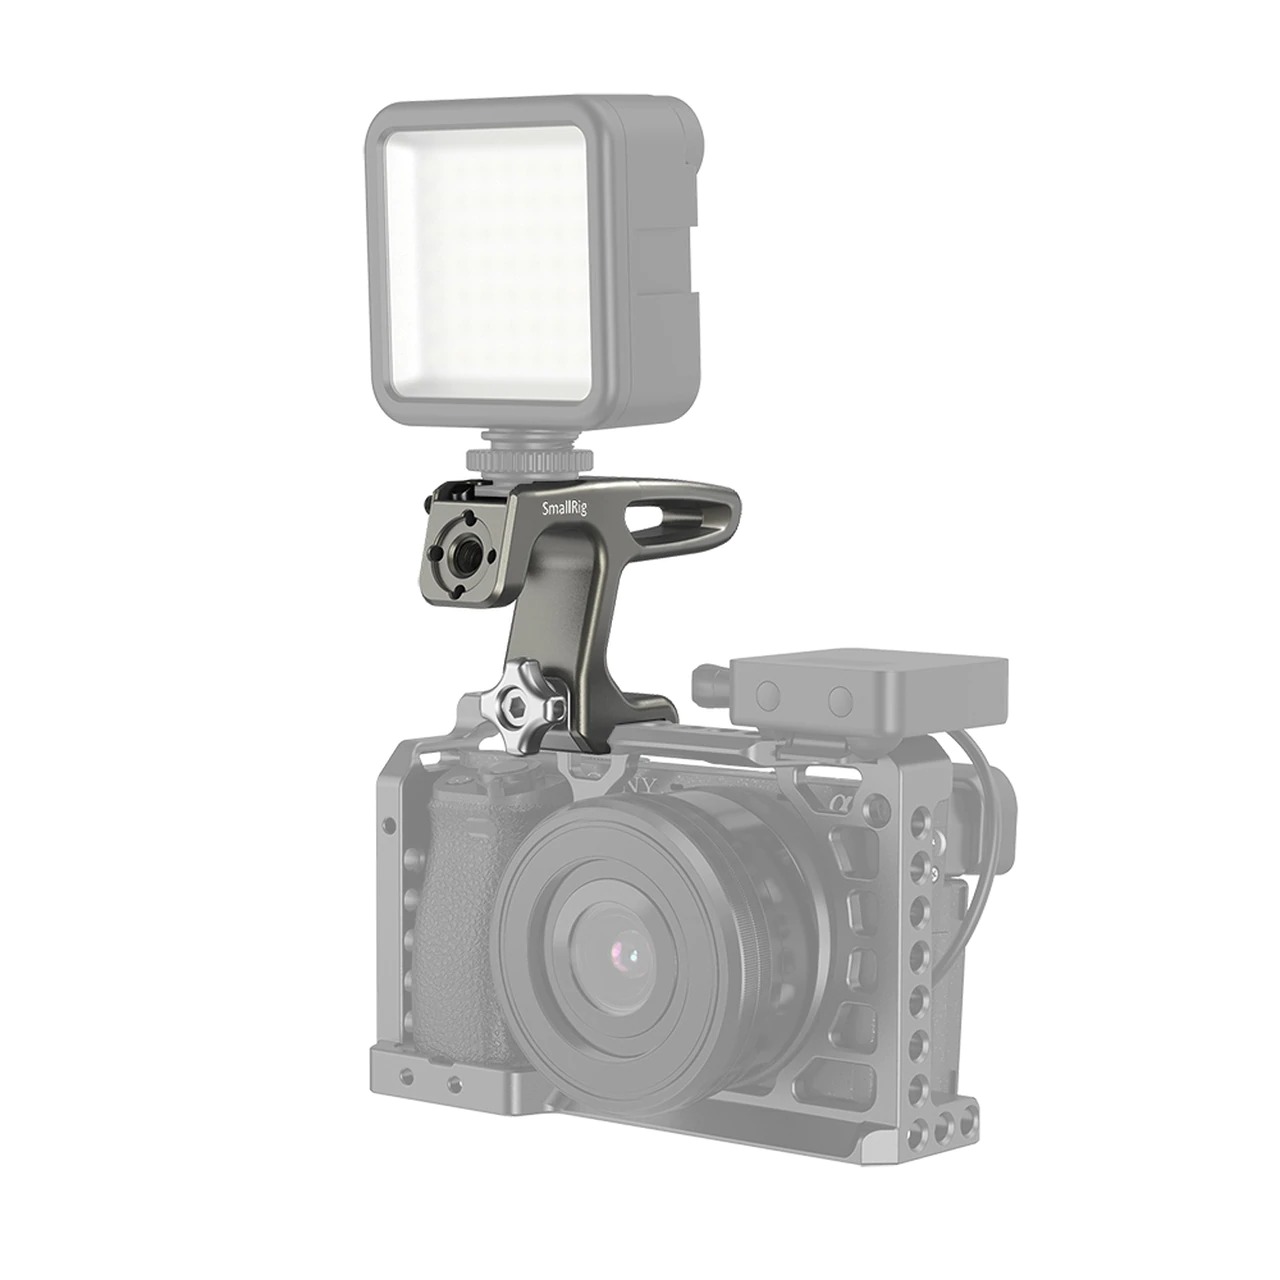 SmallRig Mini Top Handle for Light-weight Cameras (NATO Clamp) HTN2758  ด้ามจับบนชุดริก สำหรับกล้อง DSLR, Mirrorless หรือกล้องขนาดเล็ก ติดกับราง NATO พร้อมฮอทชู ราคา 1400 บาท